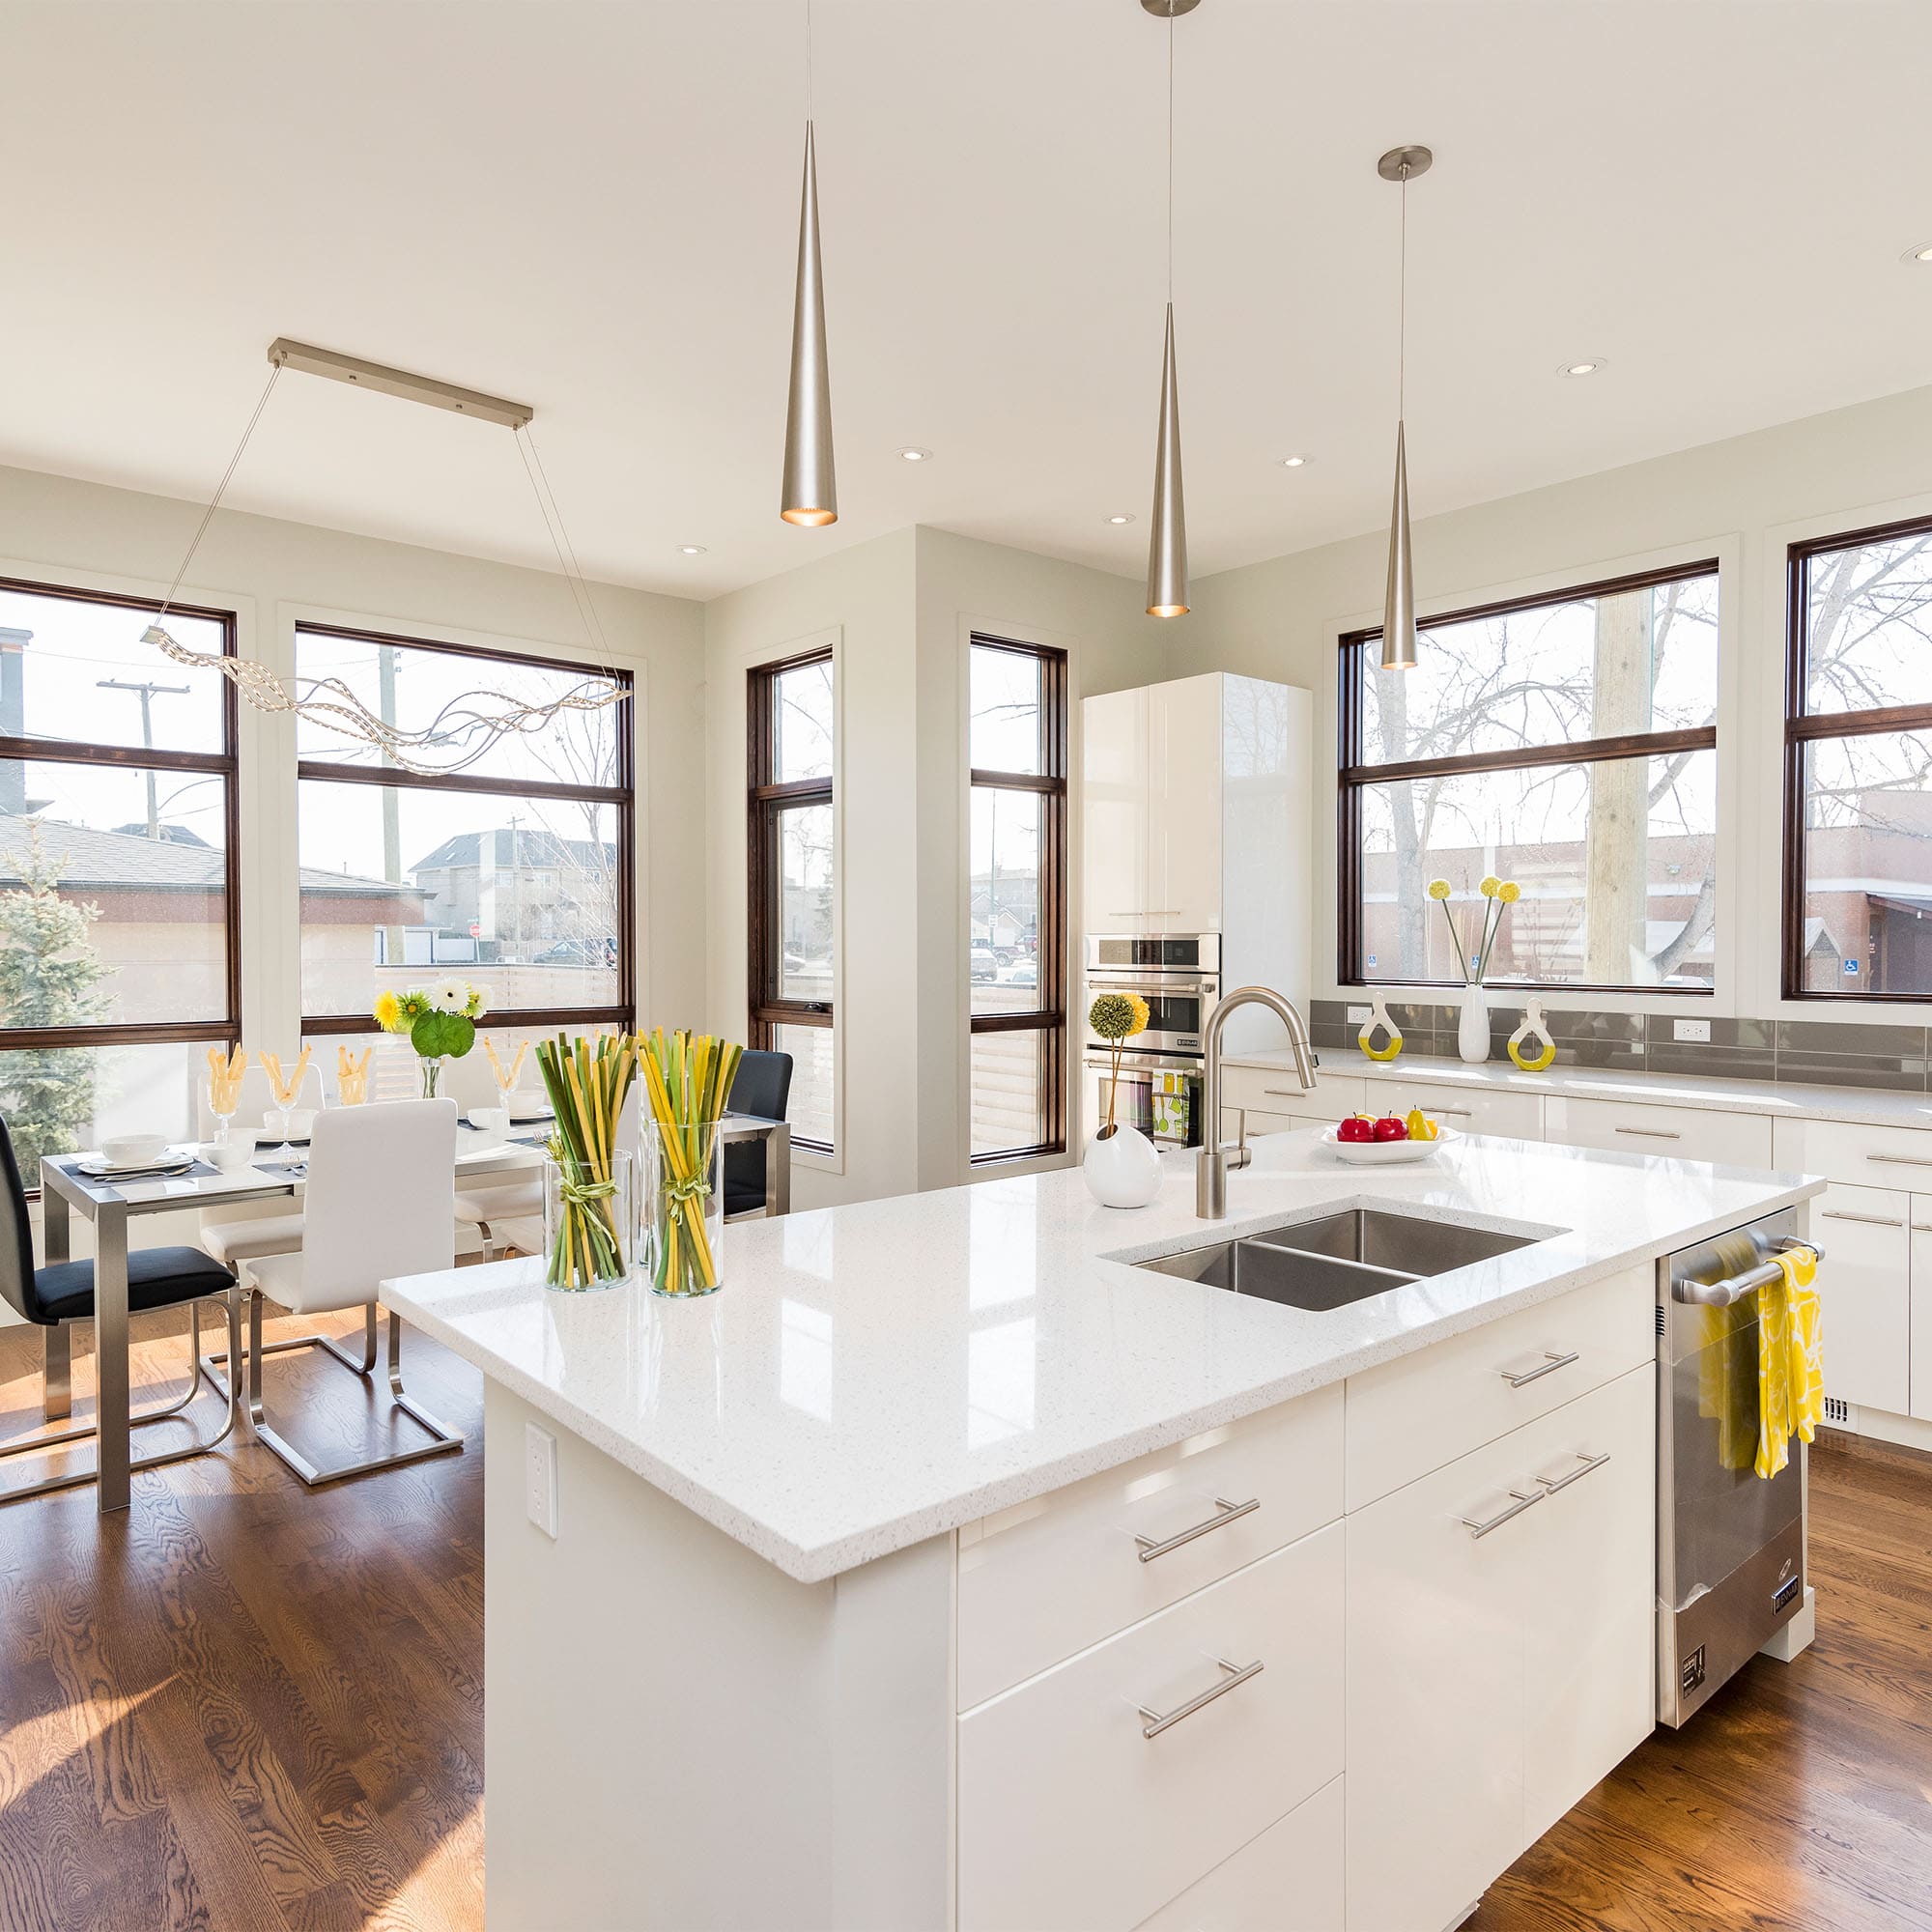 interior-shot-modern-house-kitchen-with-large-windows